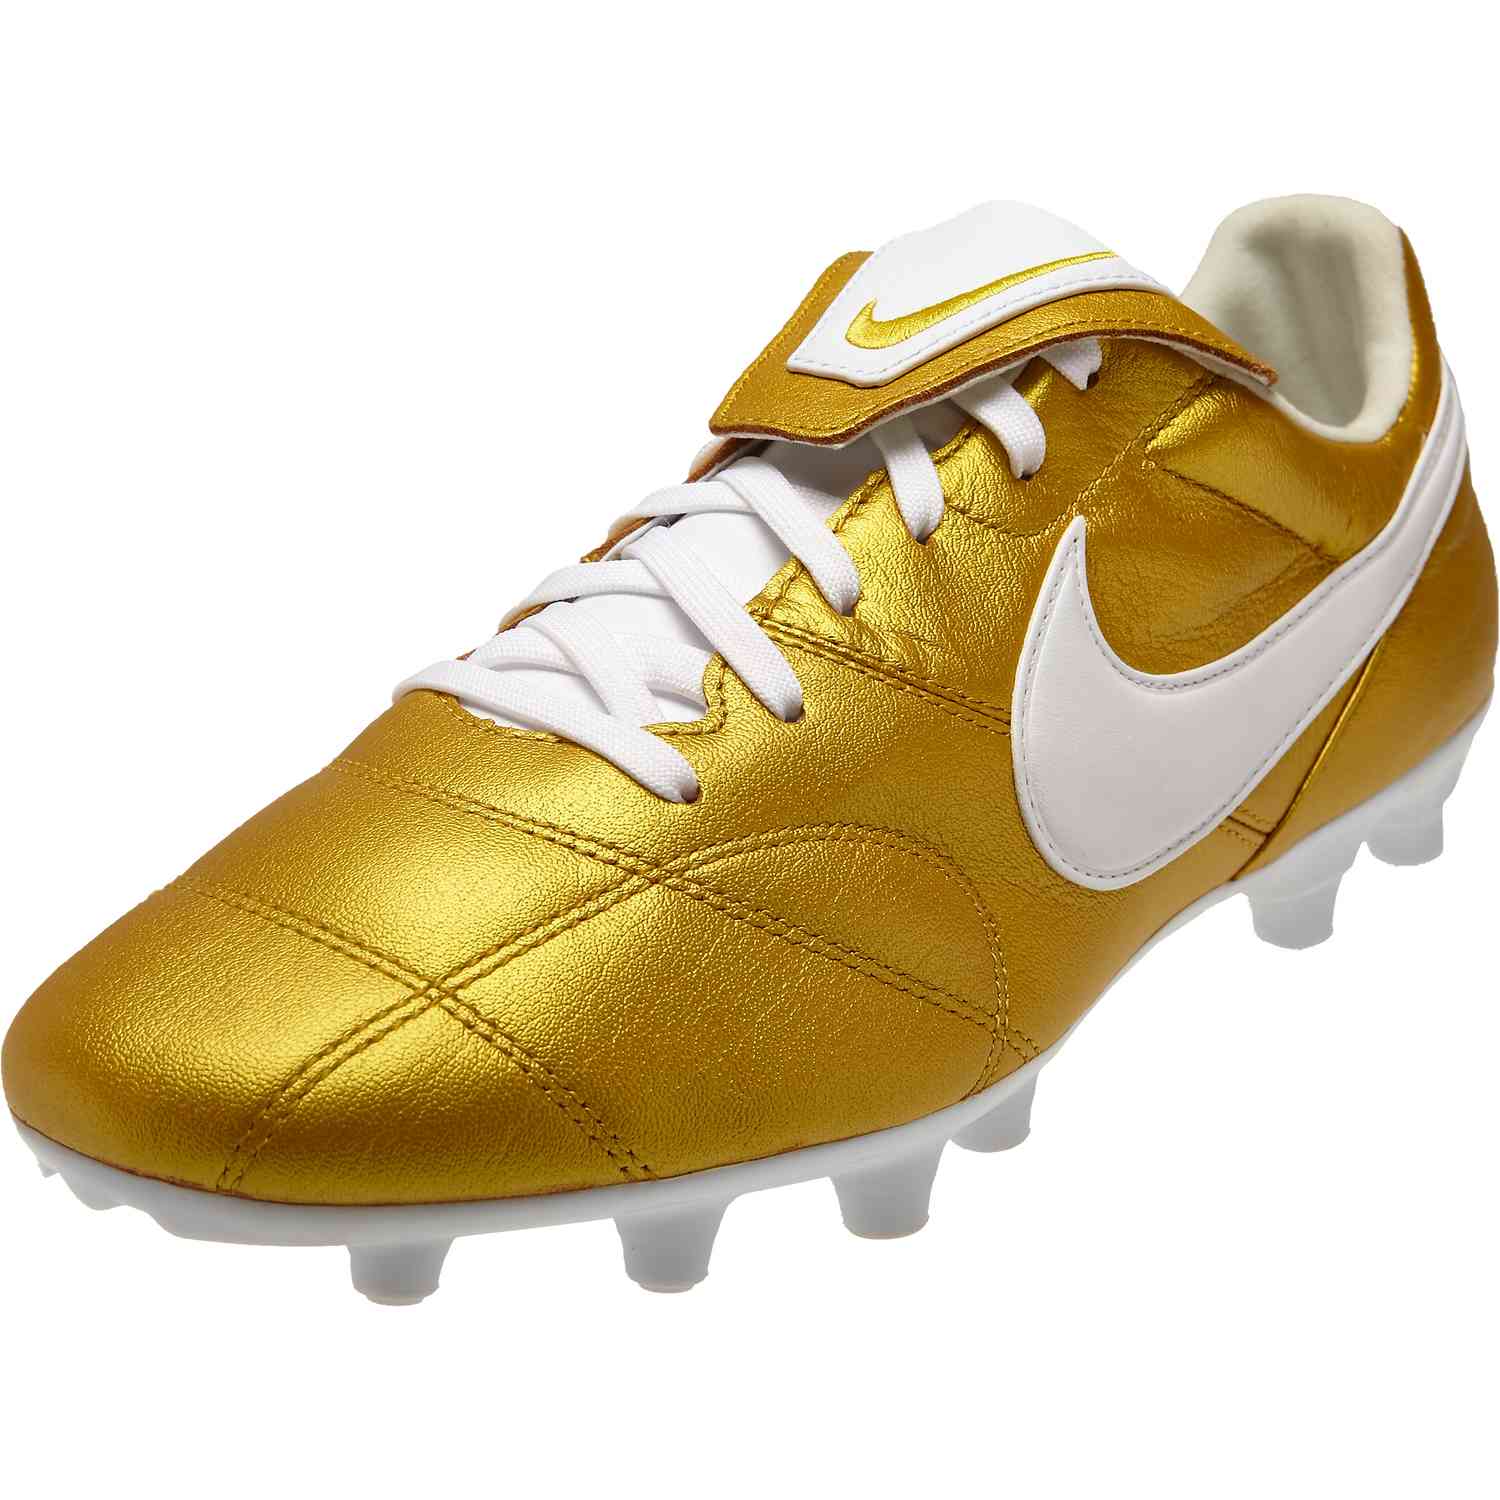 The Nike Premier II FG - Metallic Vivid Gold/White - SoccerPro